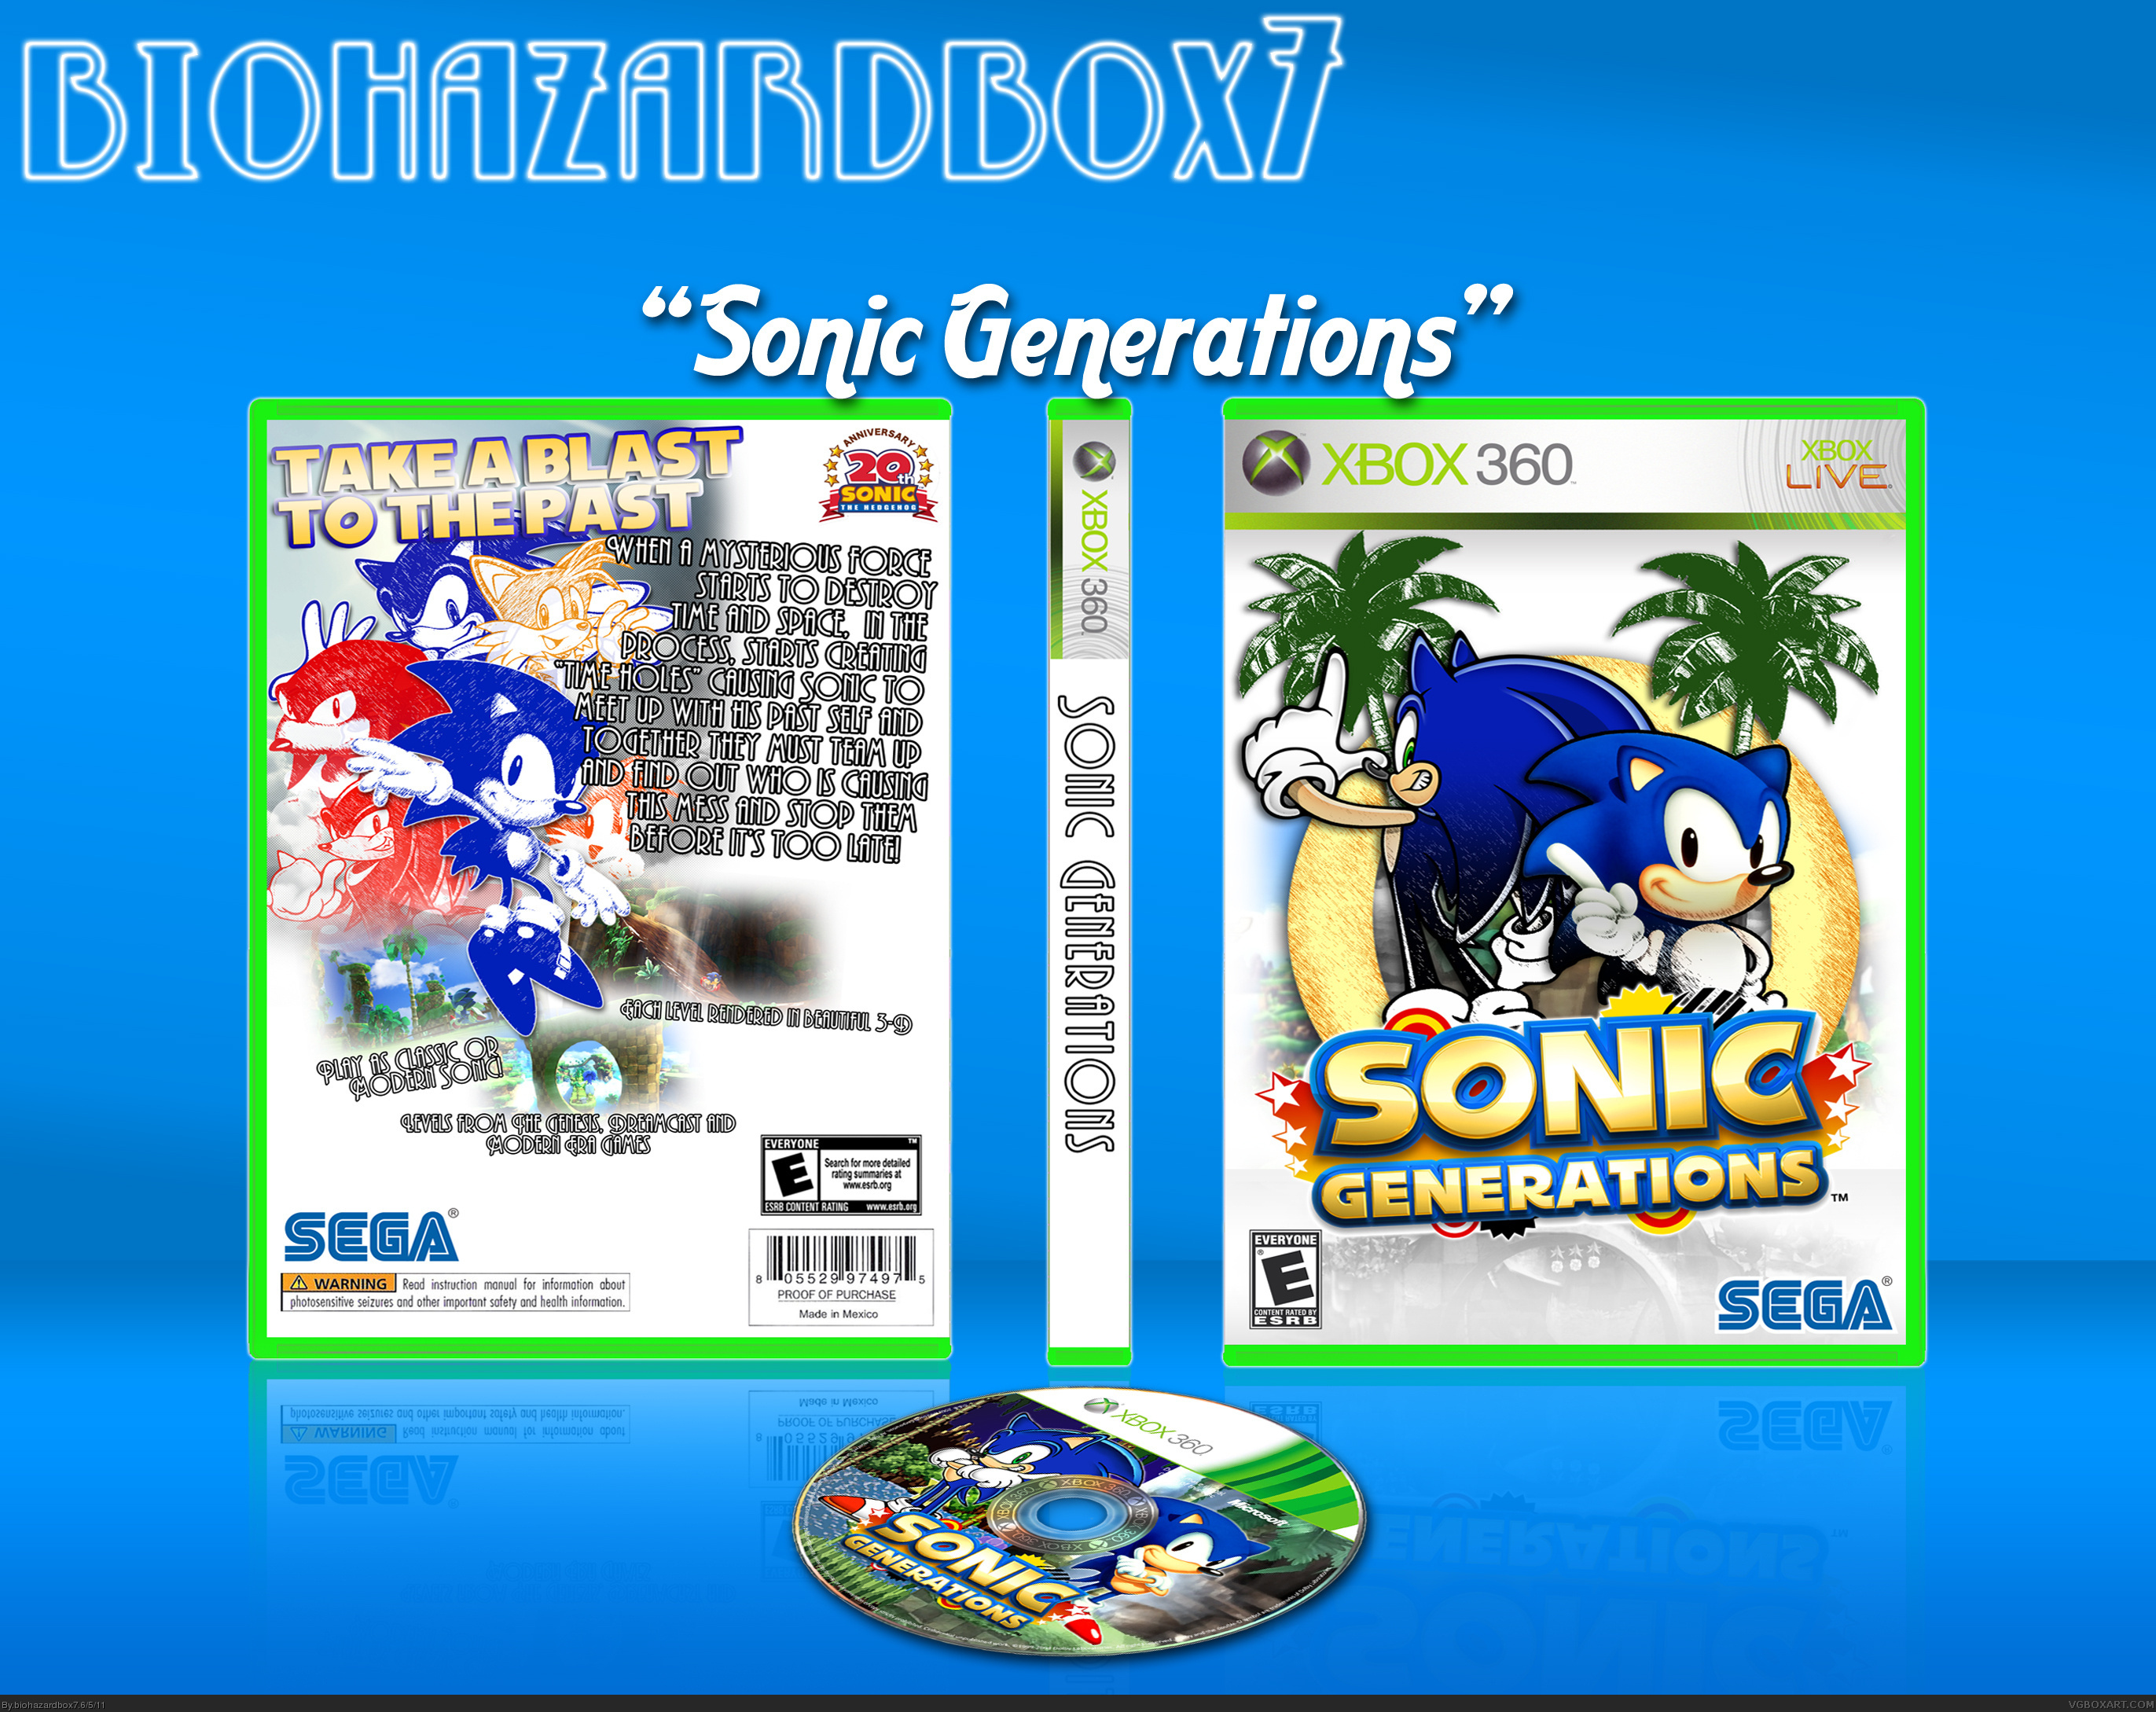 Sonic Generations Xbox 360 Box Art Cover by biohazardbox7